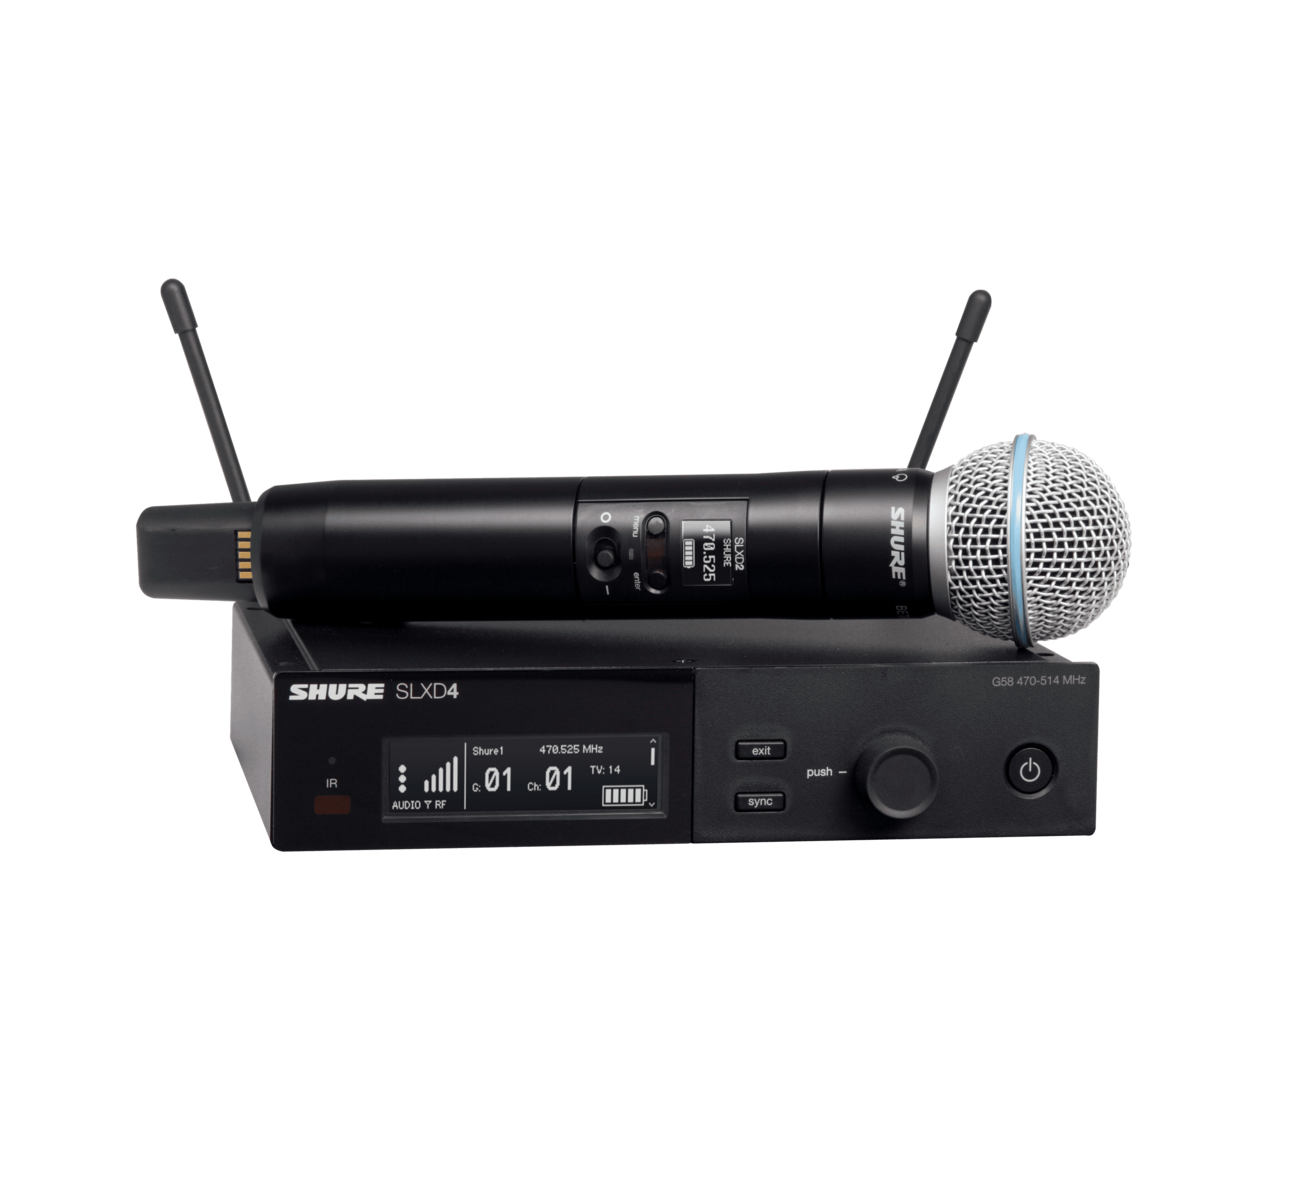 Microfoane wireless - Microfon wireless Shure SLXD2/B58-J53 / SLXD4E-J53 , audioclub.ro